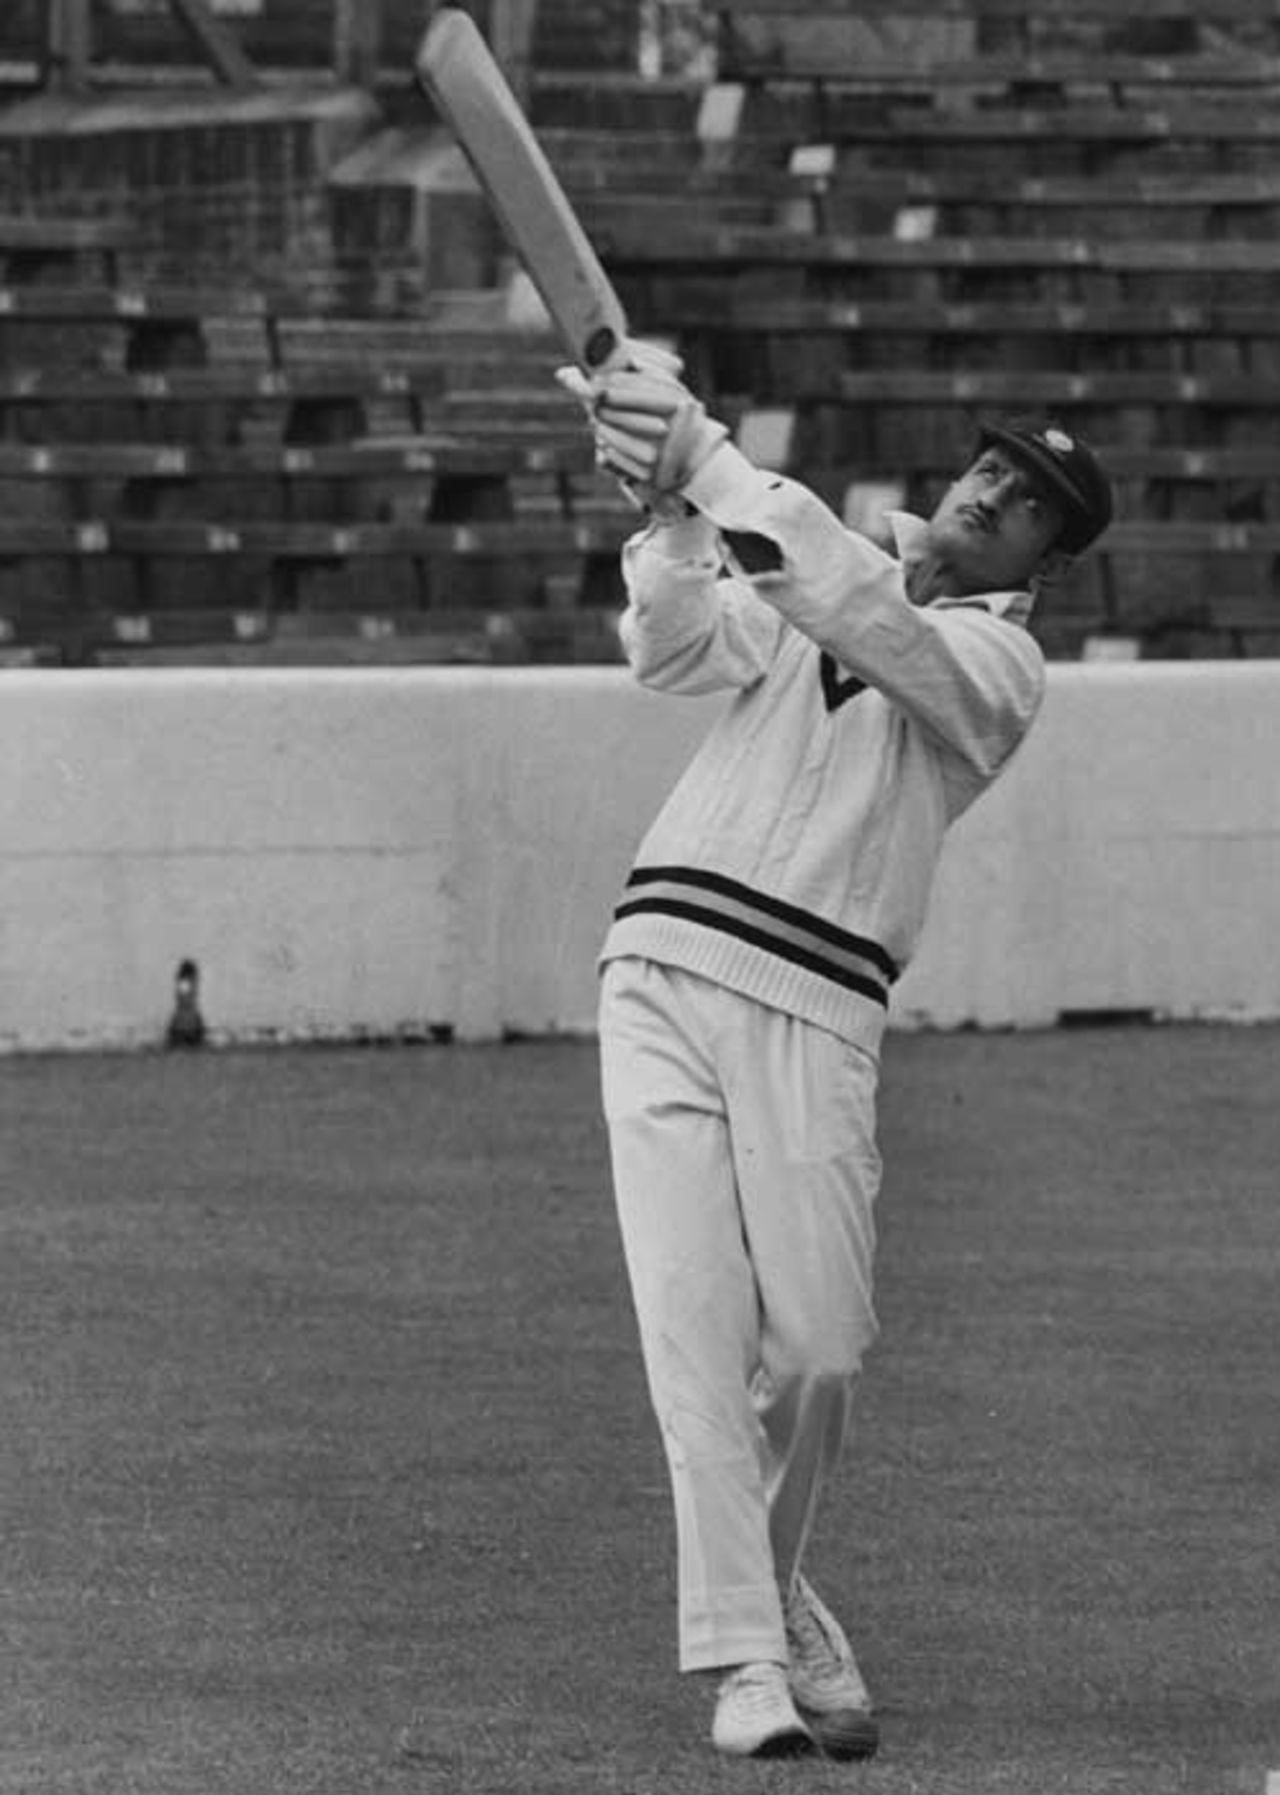 Ajit Wadekar bats at The Oval in 1971

